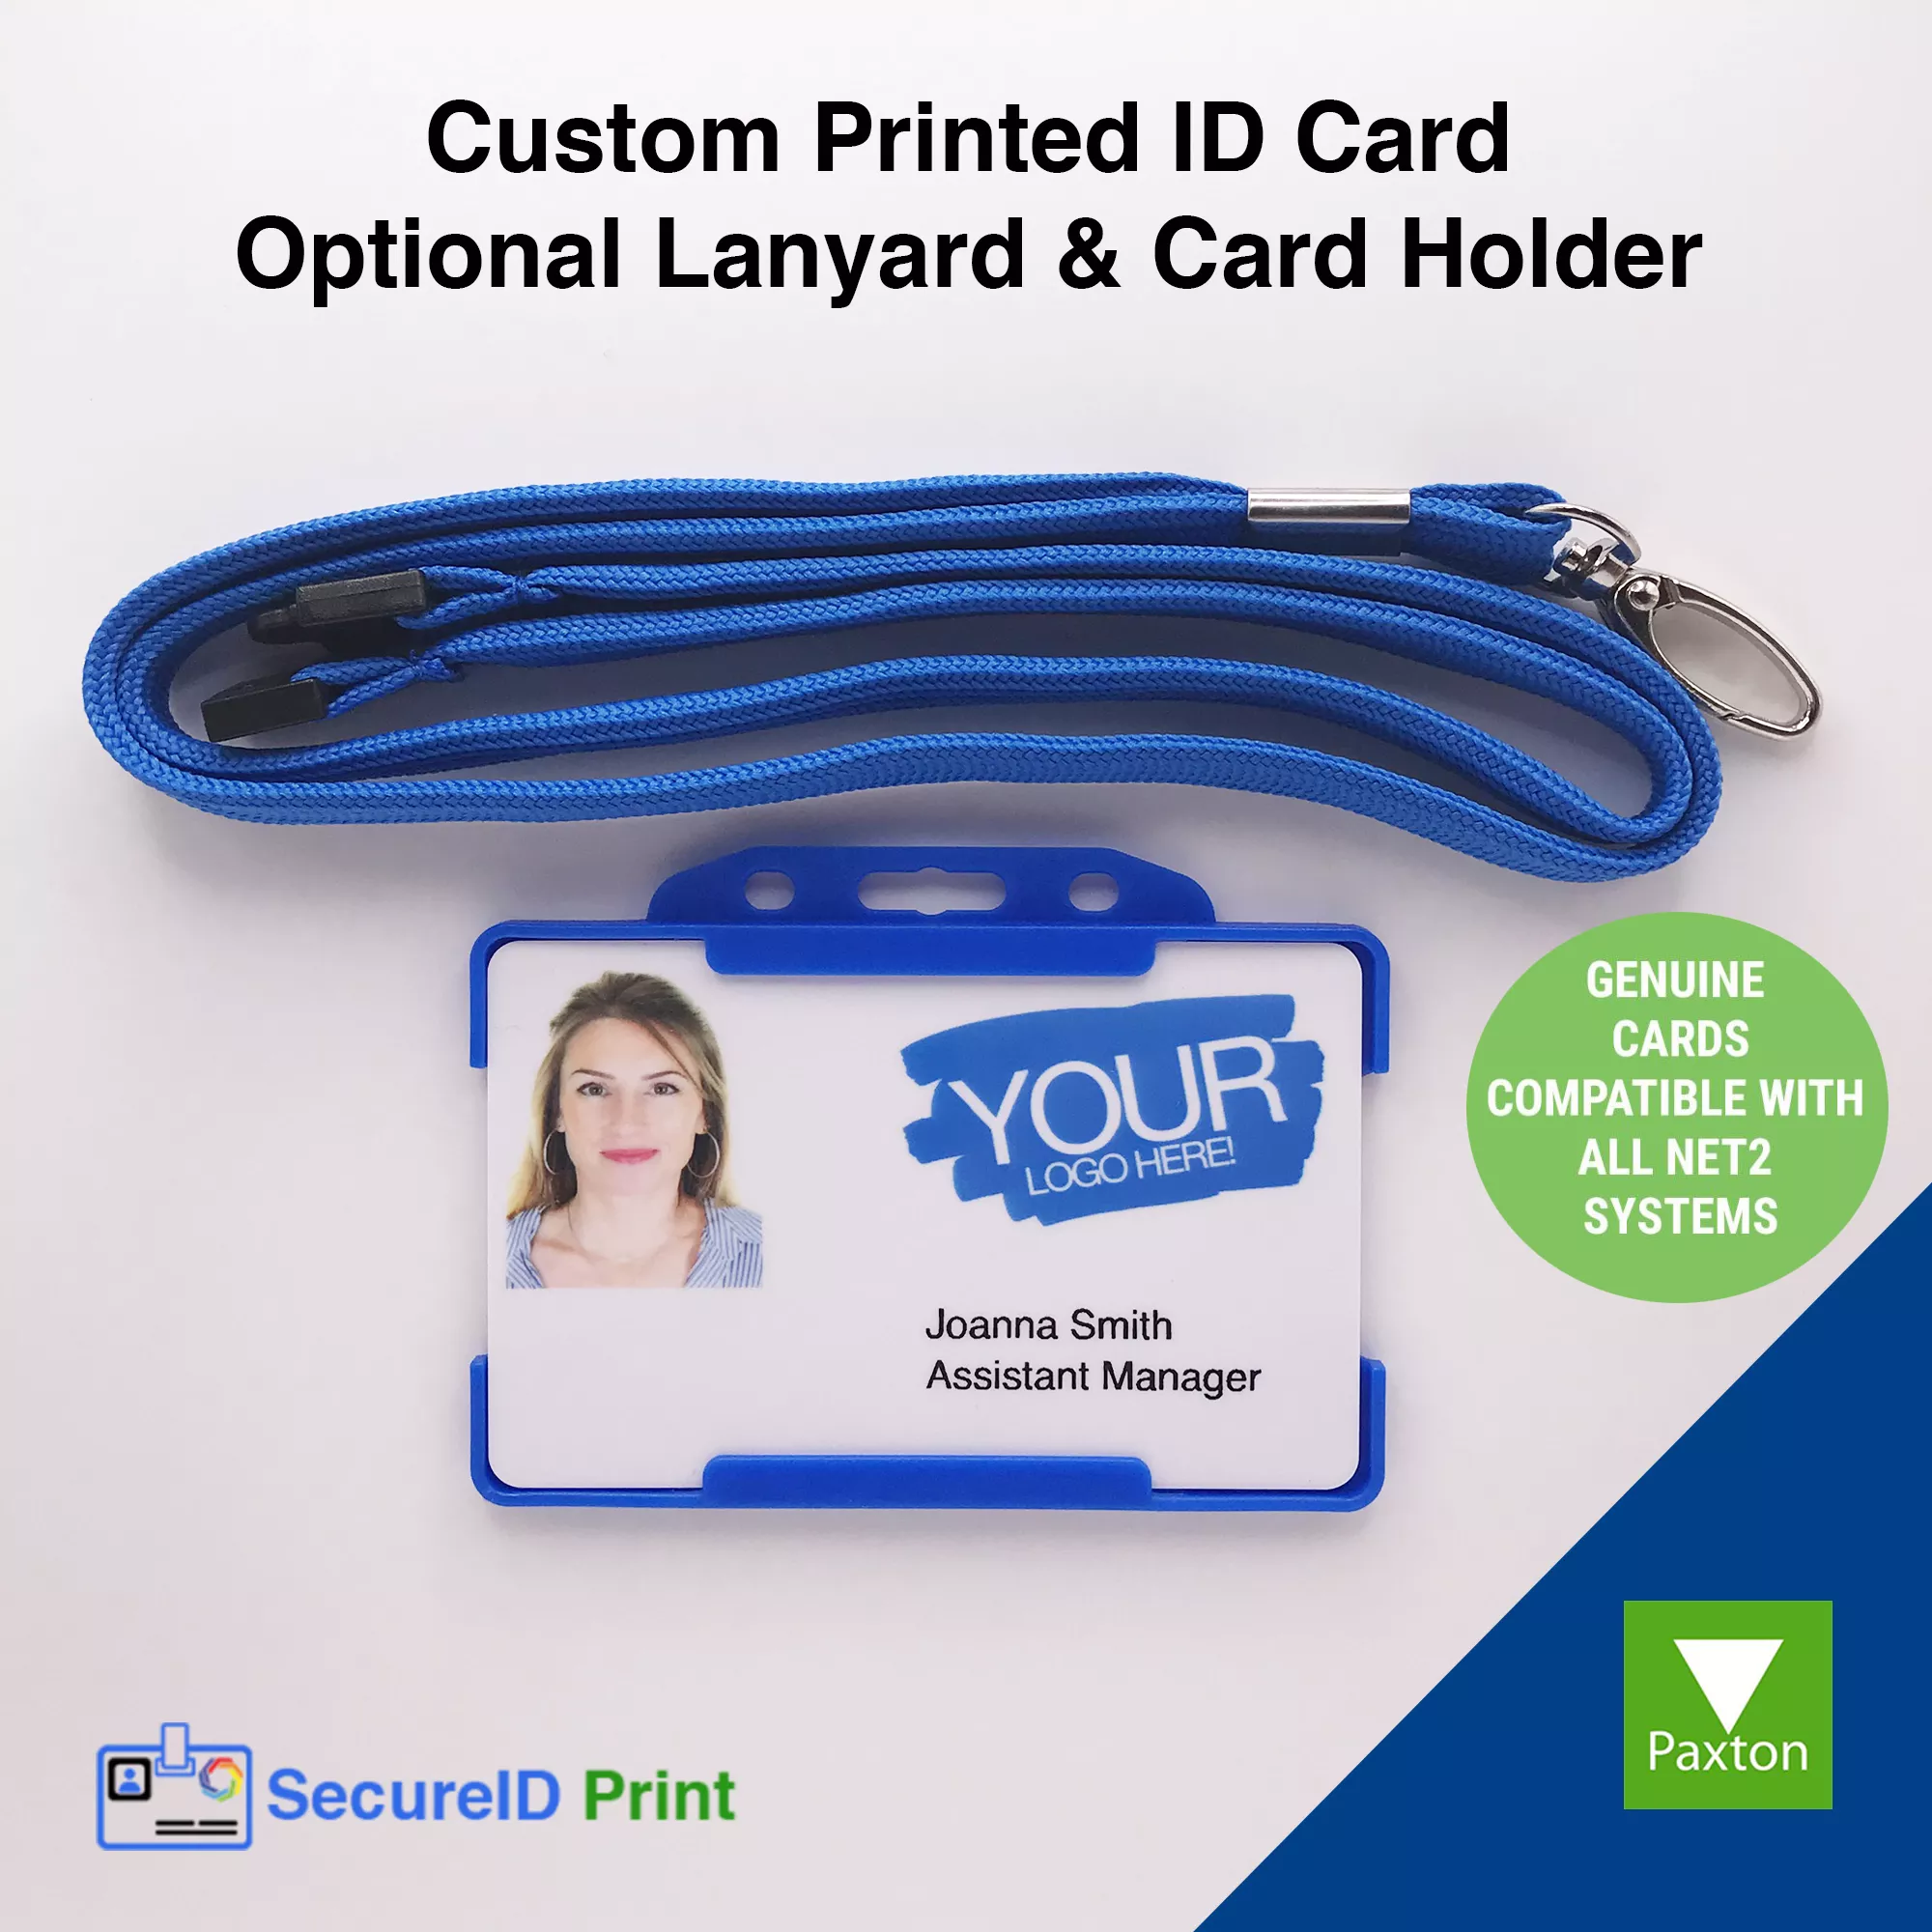 Why choose SecureID PRint ID cards?